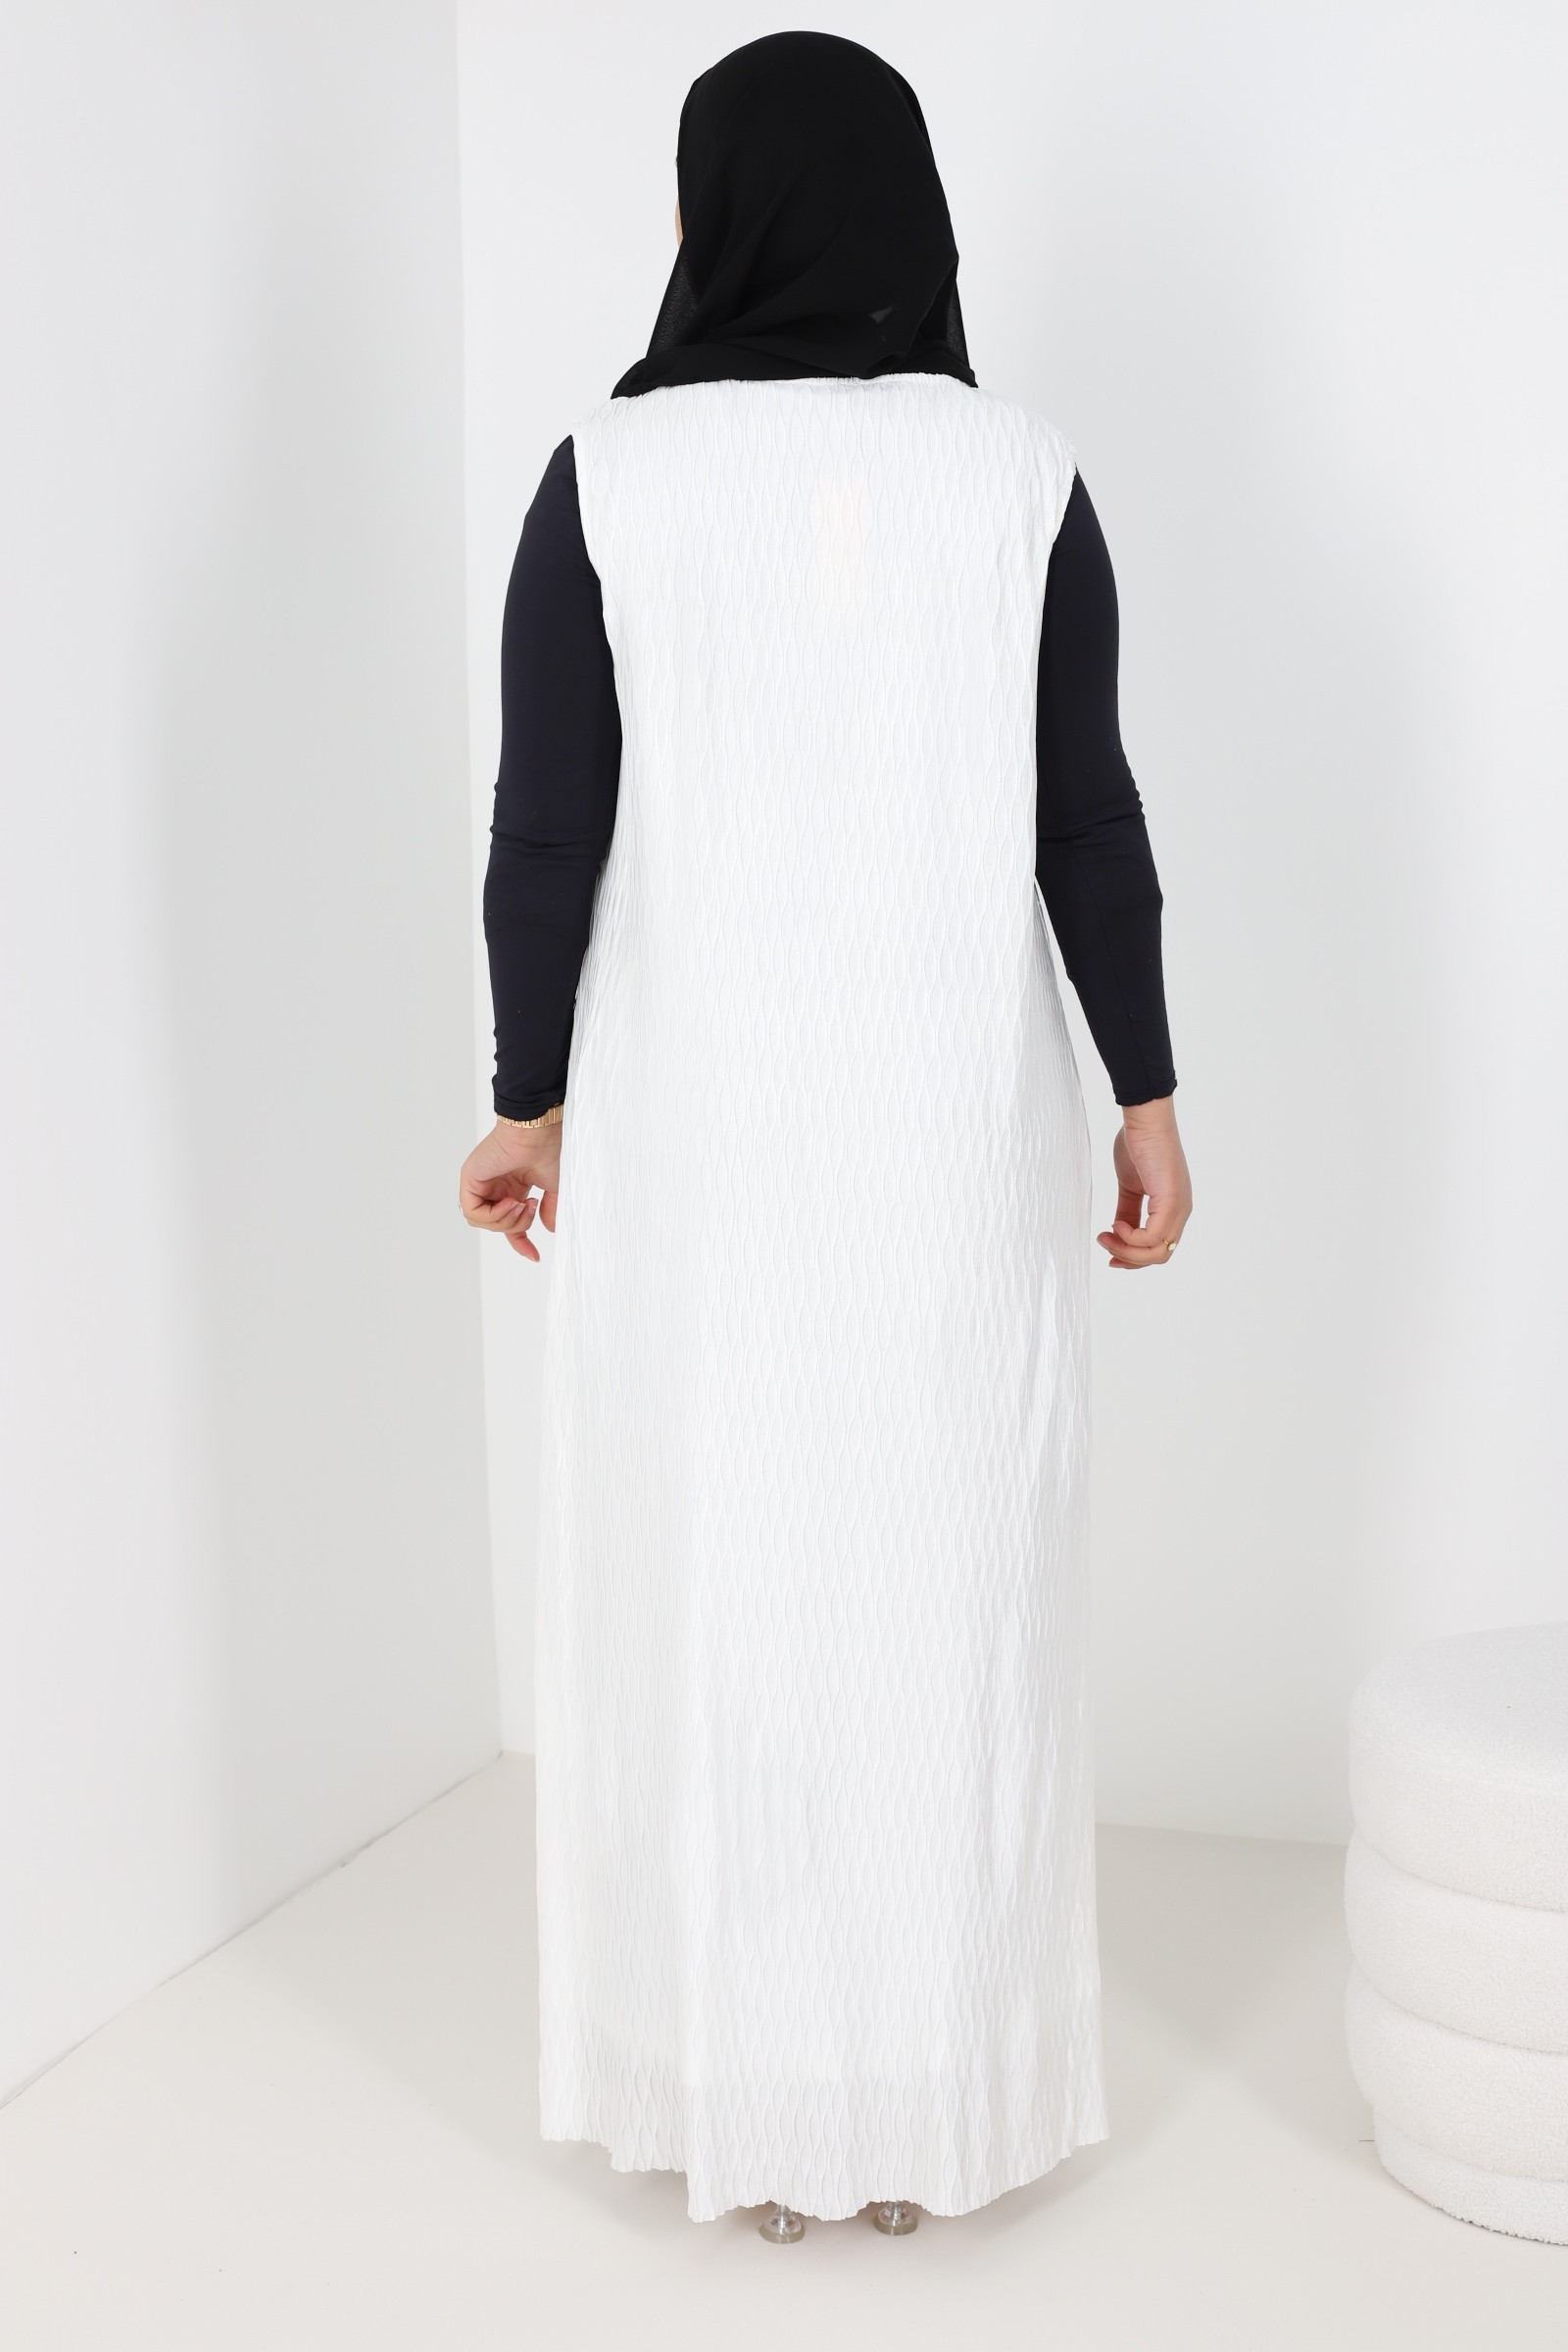 Sous abaya sans manches pour femme - sous robe pour abaya